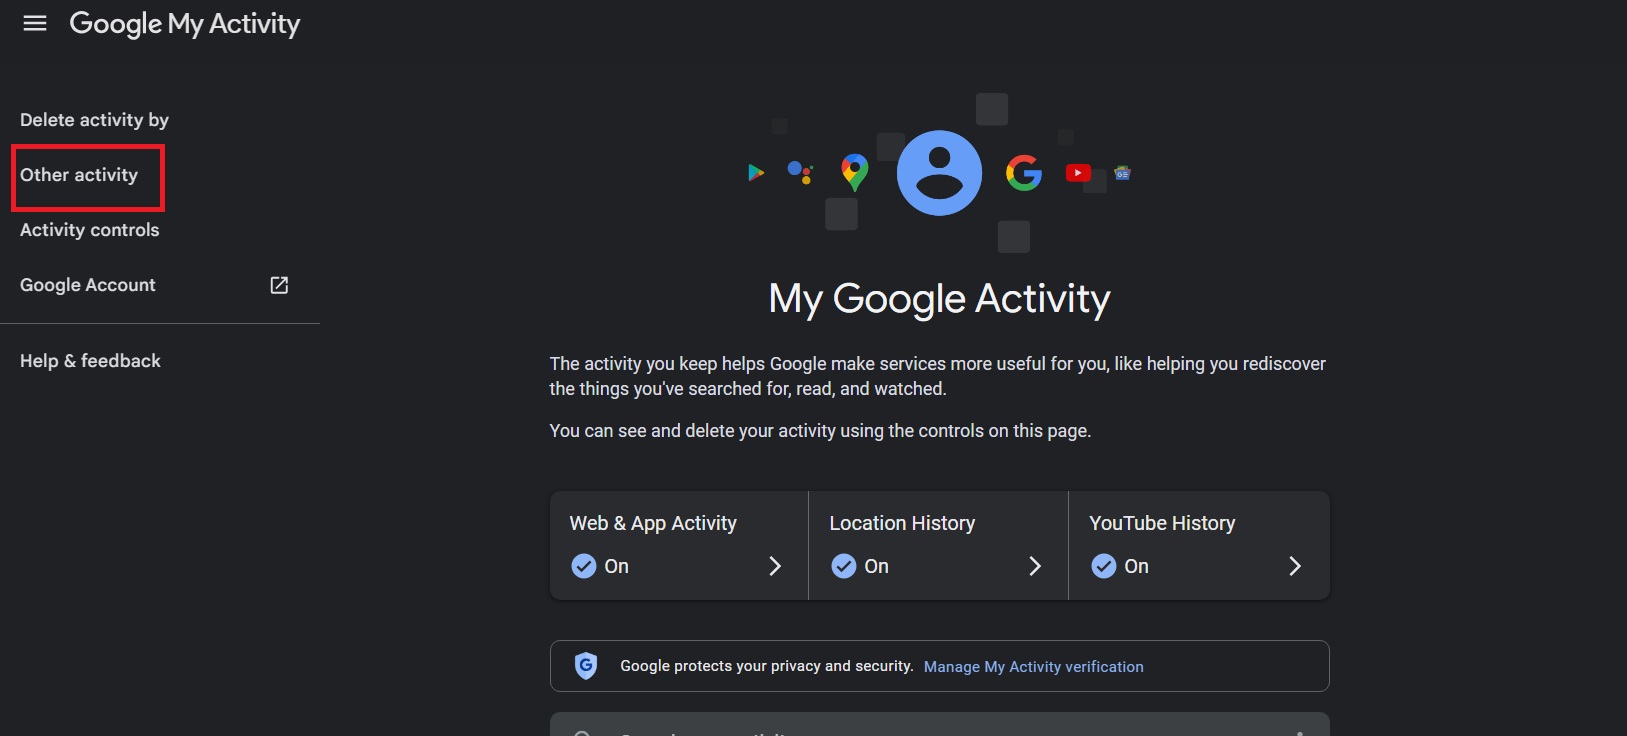 Other activity on Google Activity